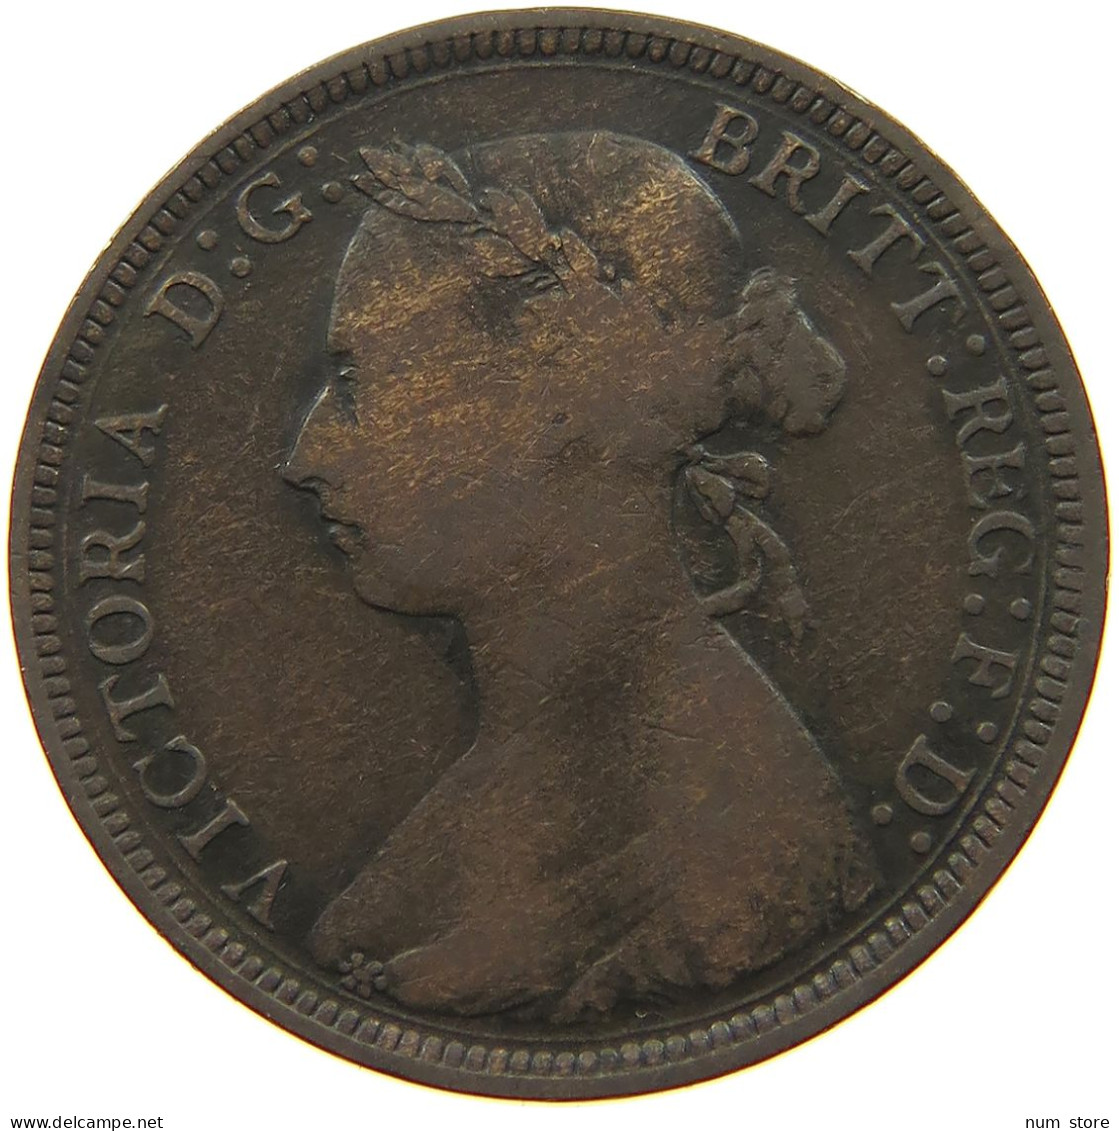 GREAT BRITAIN HALFPENNY 1889 Victoria 1837-1901 #a011 0381 - C. 1/2 Penny